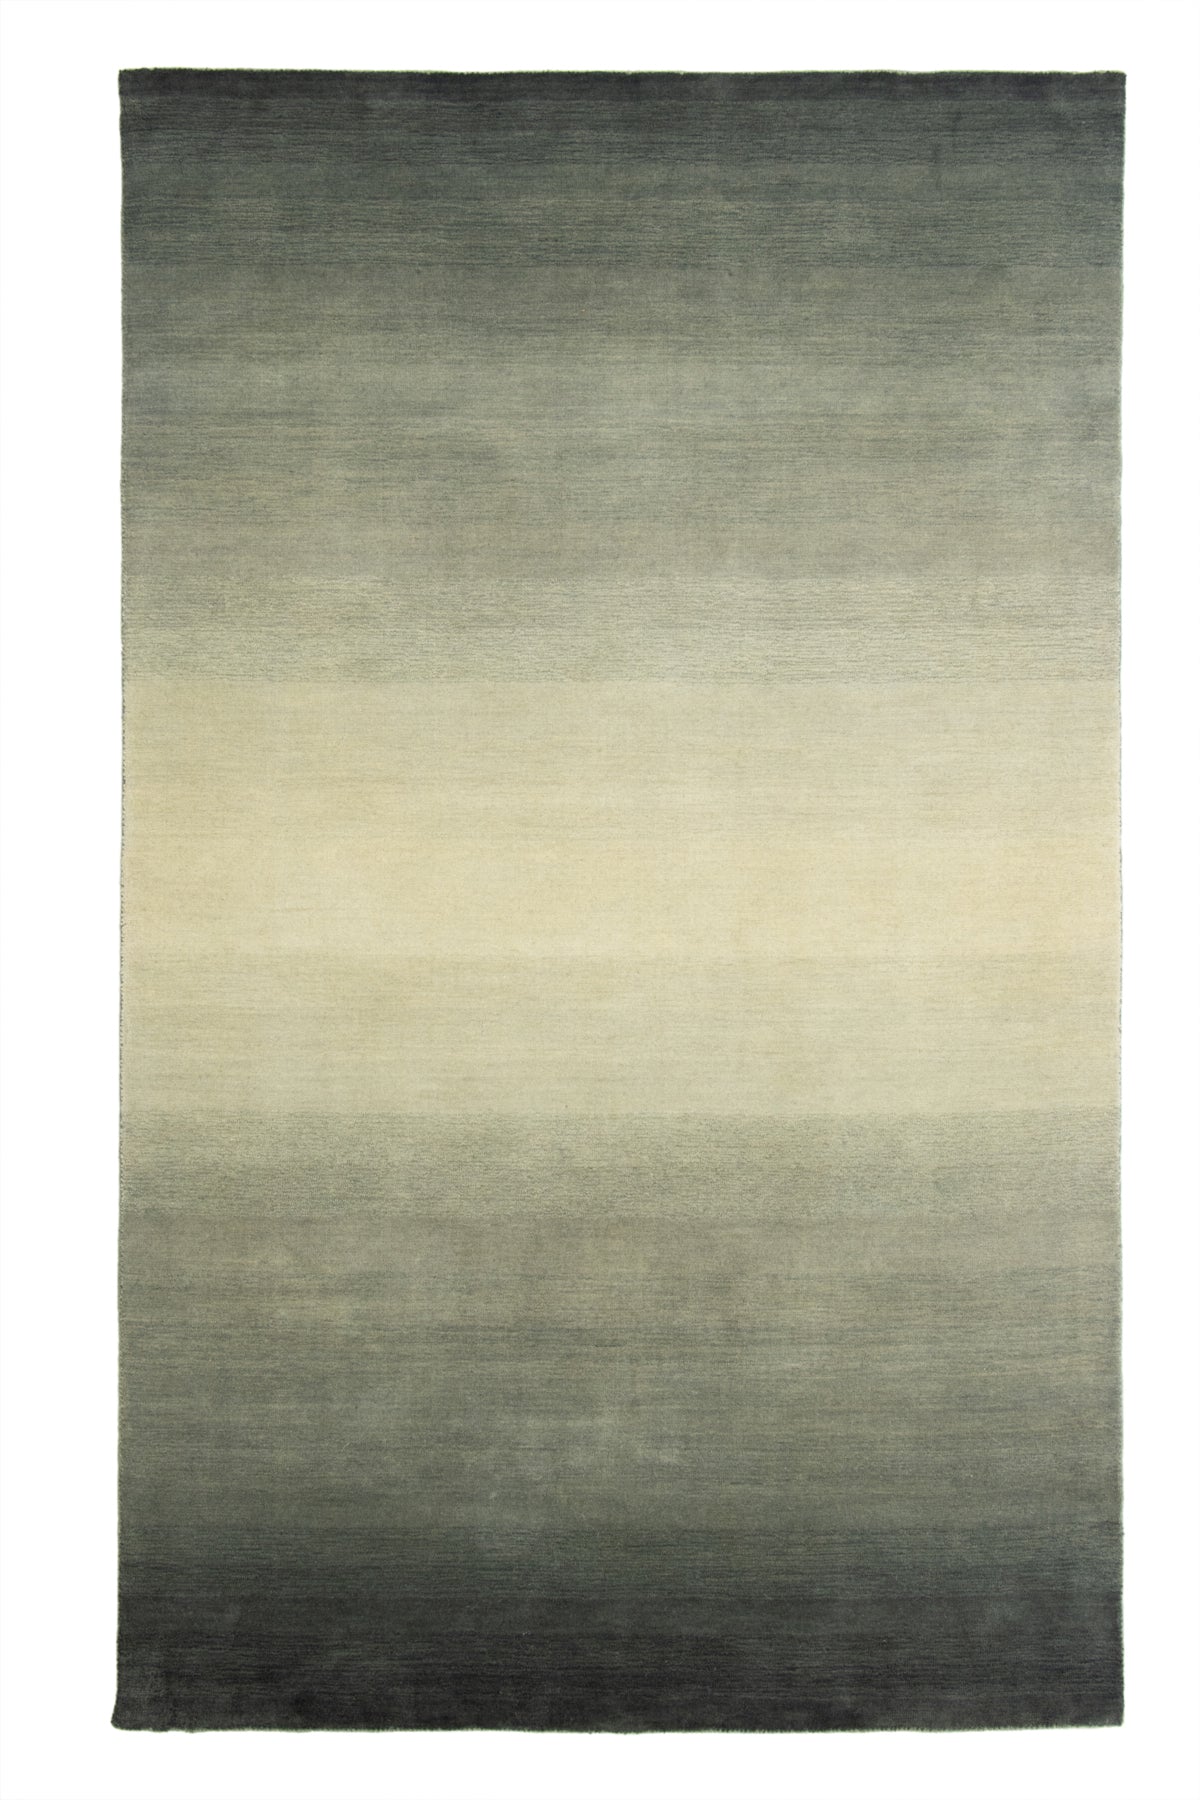 Christopher Grey Carpet 1